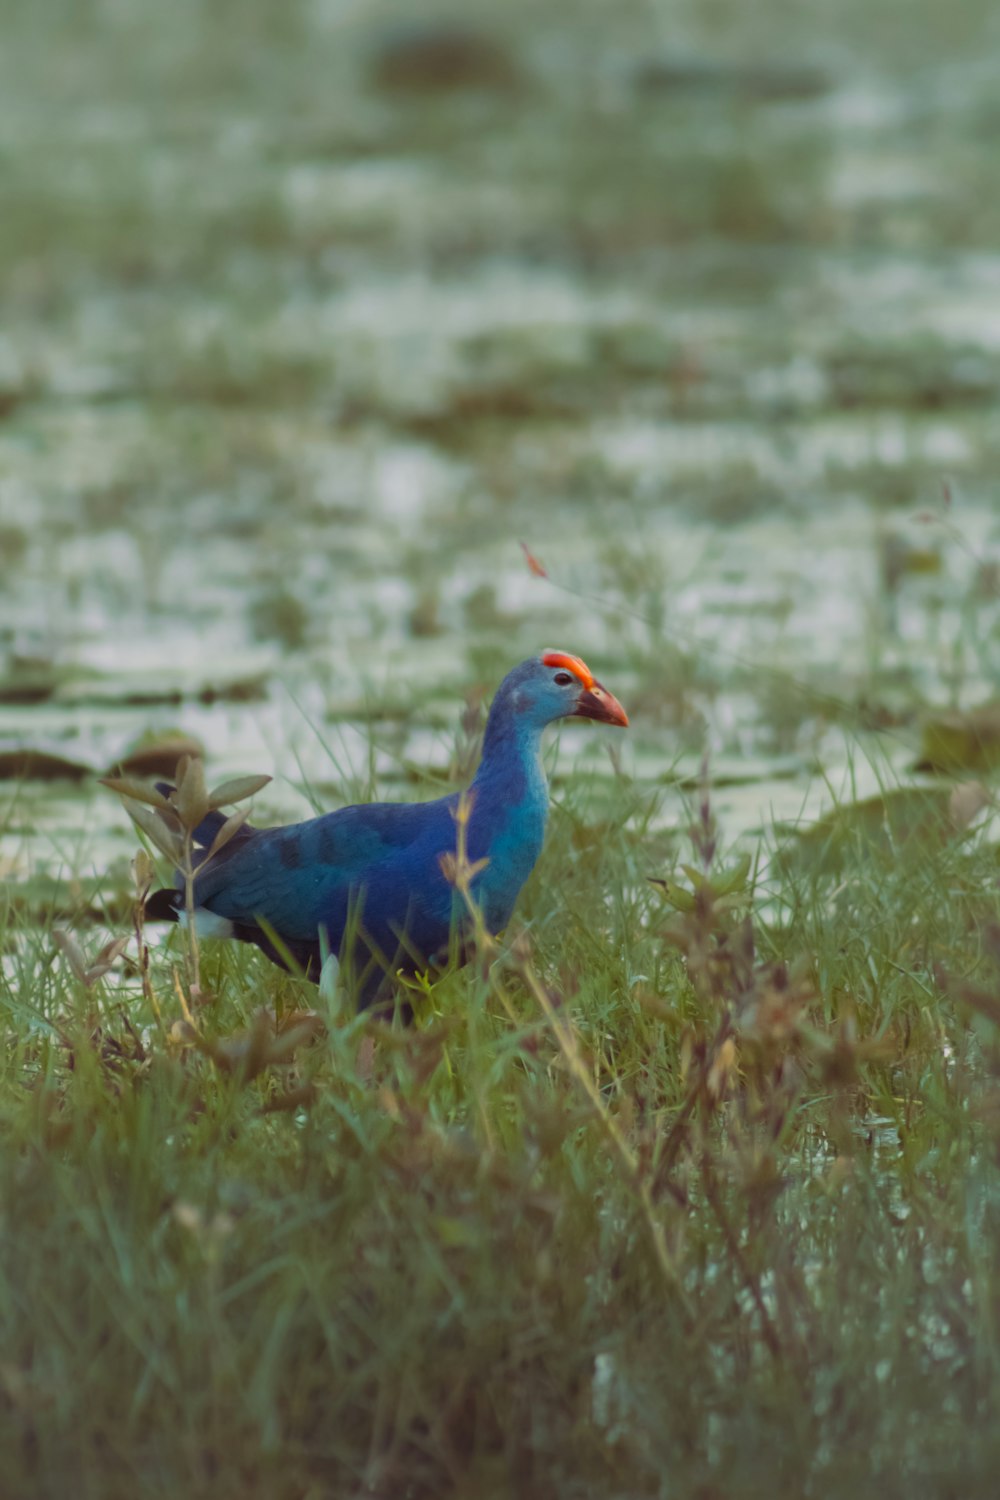 a blue bird is standing in the grass